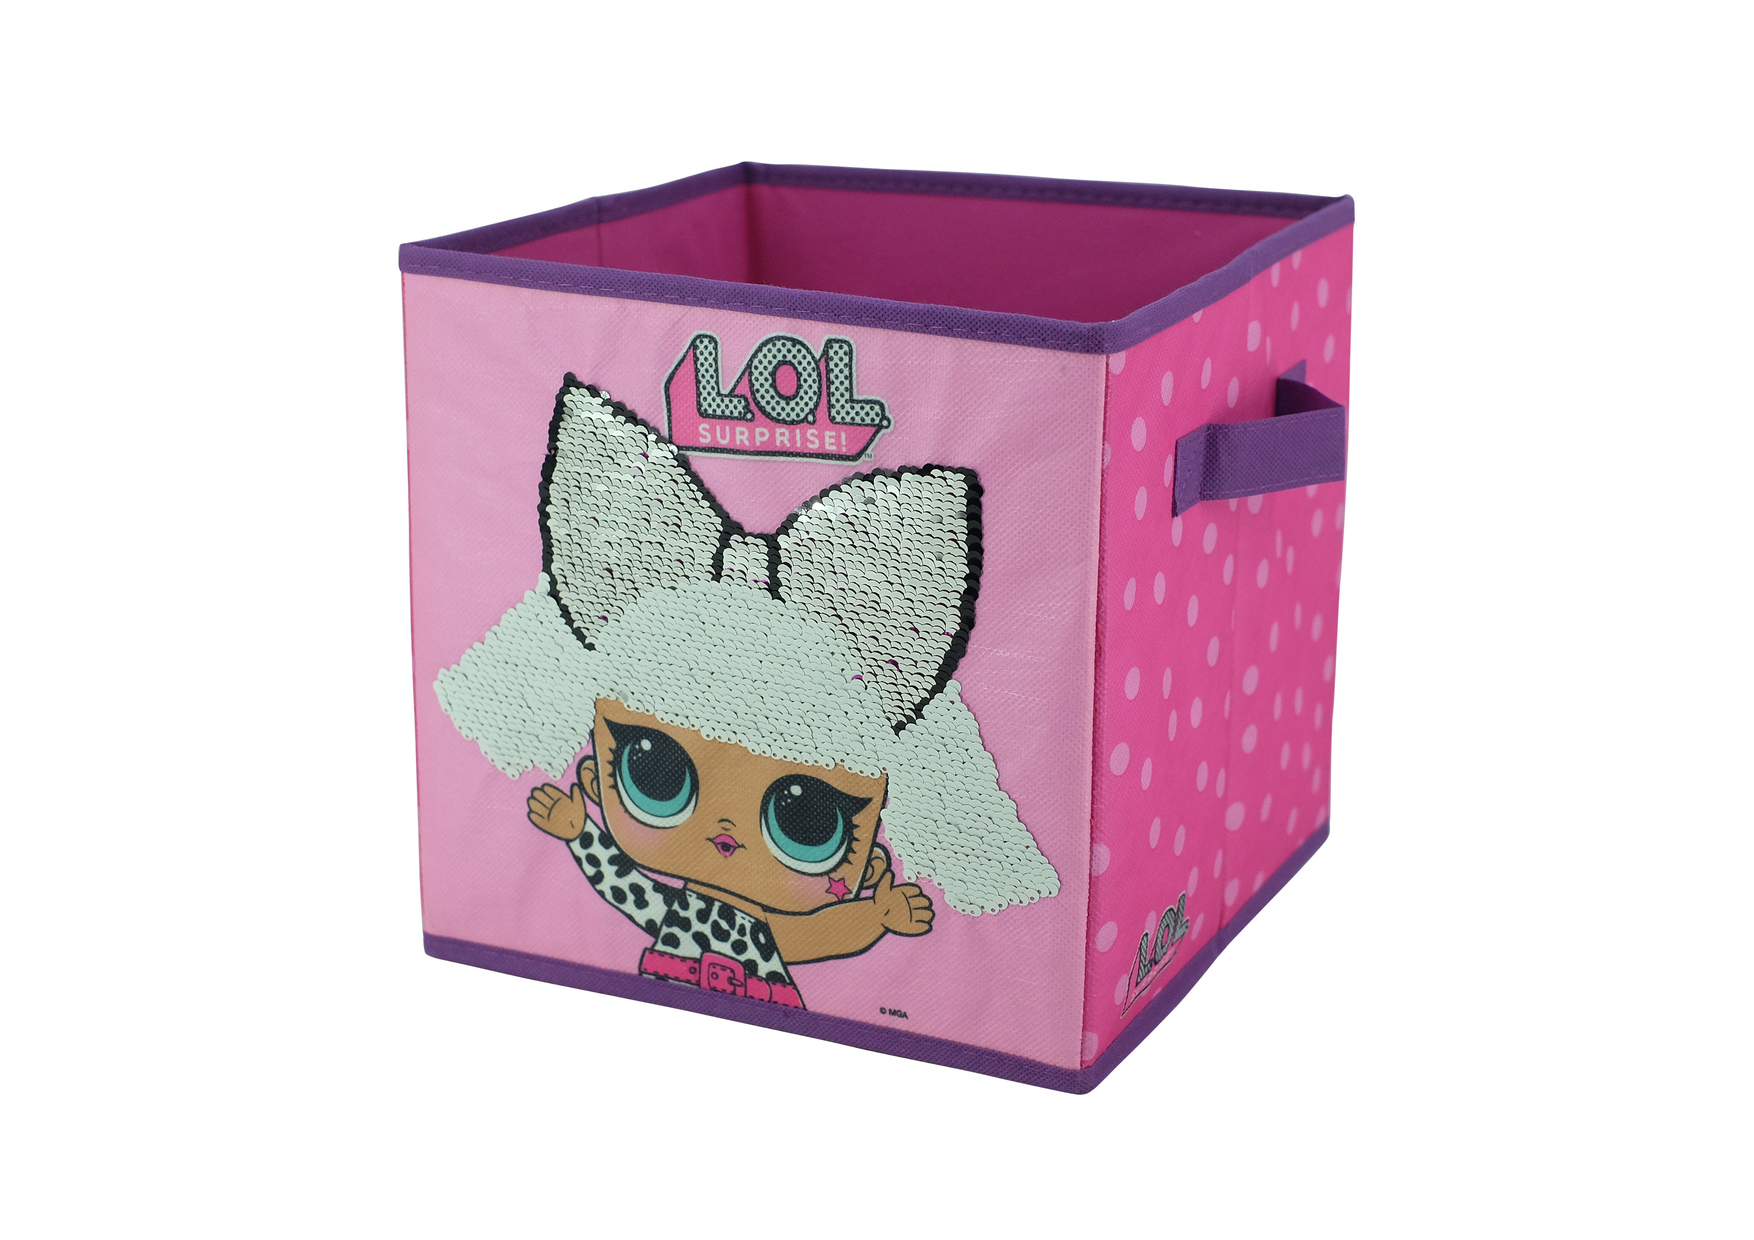 LOL Surprise Reversible Sequin Storage Cube - image 2 of 2